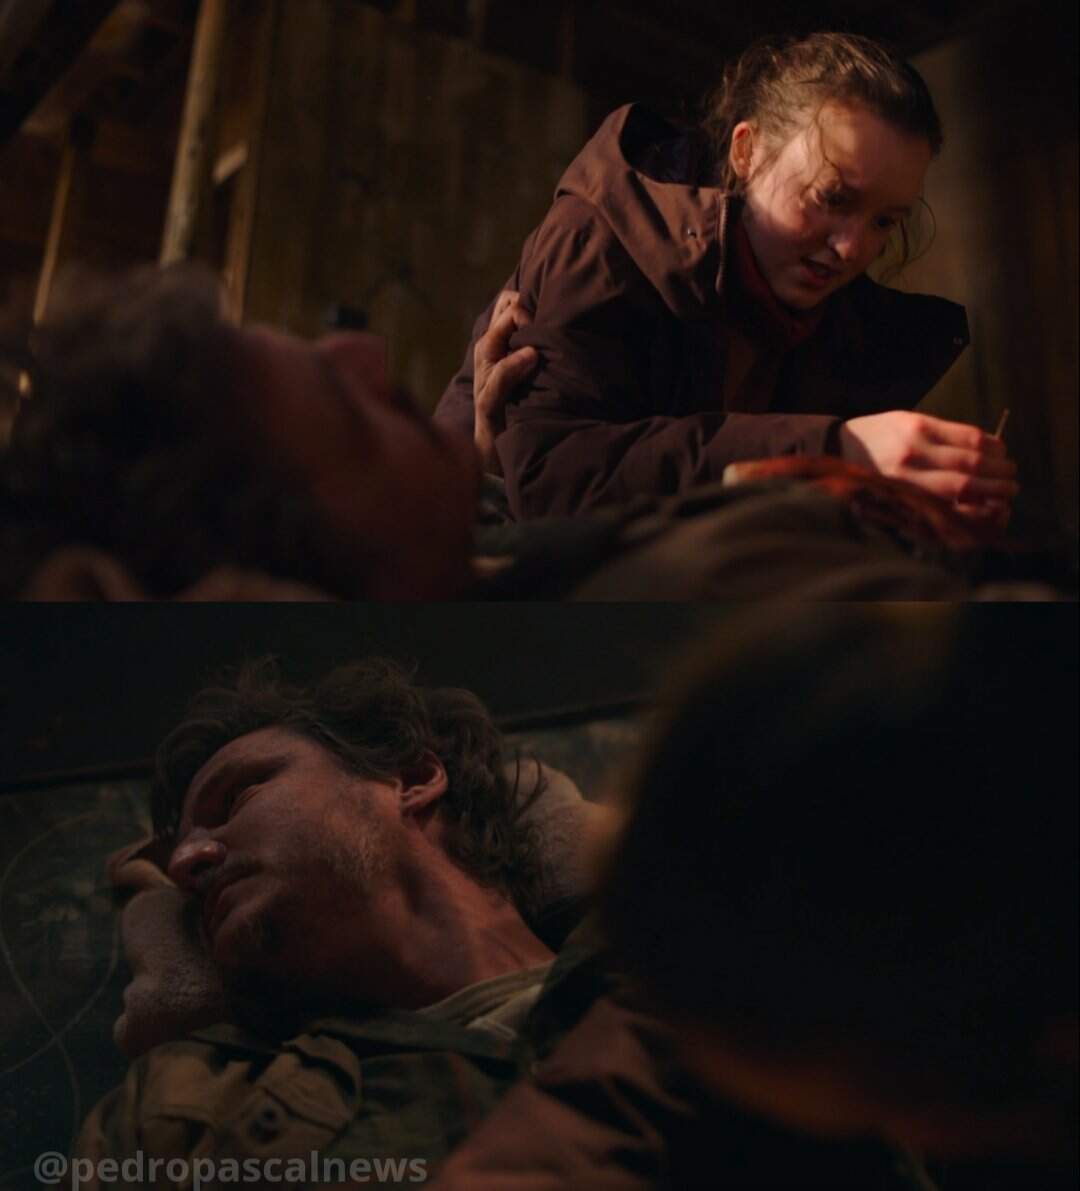 Ellie salva Joel em "Left Behind". (Foto: Reprodução/Twitter)